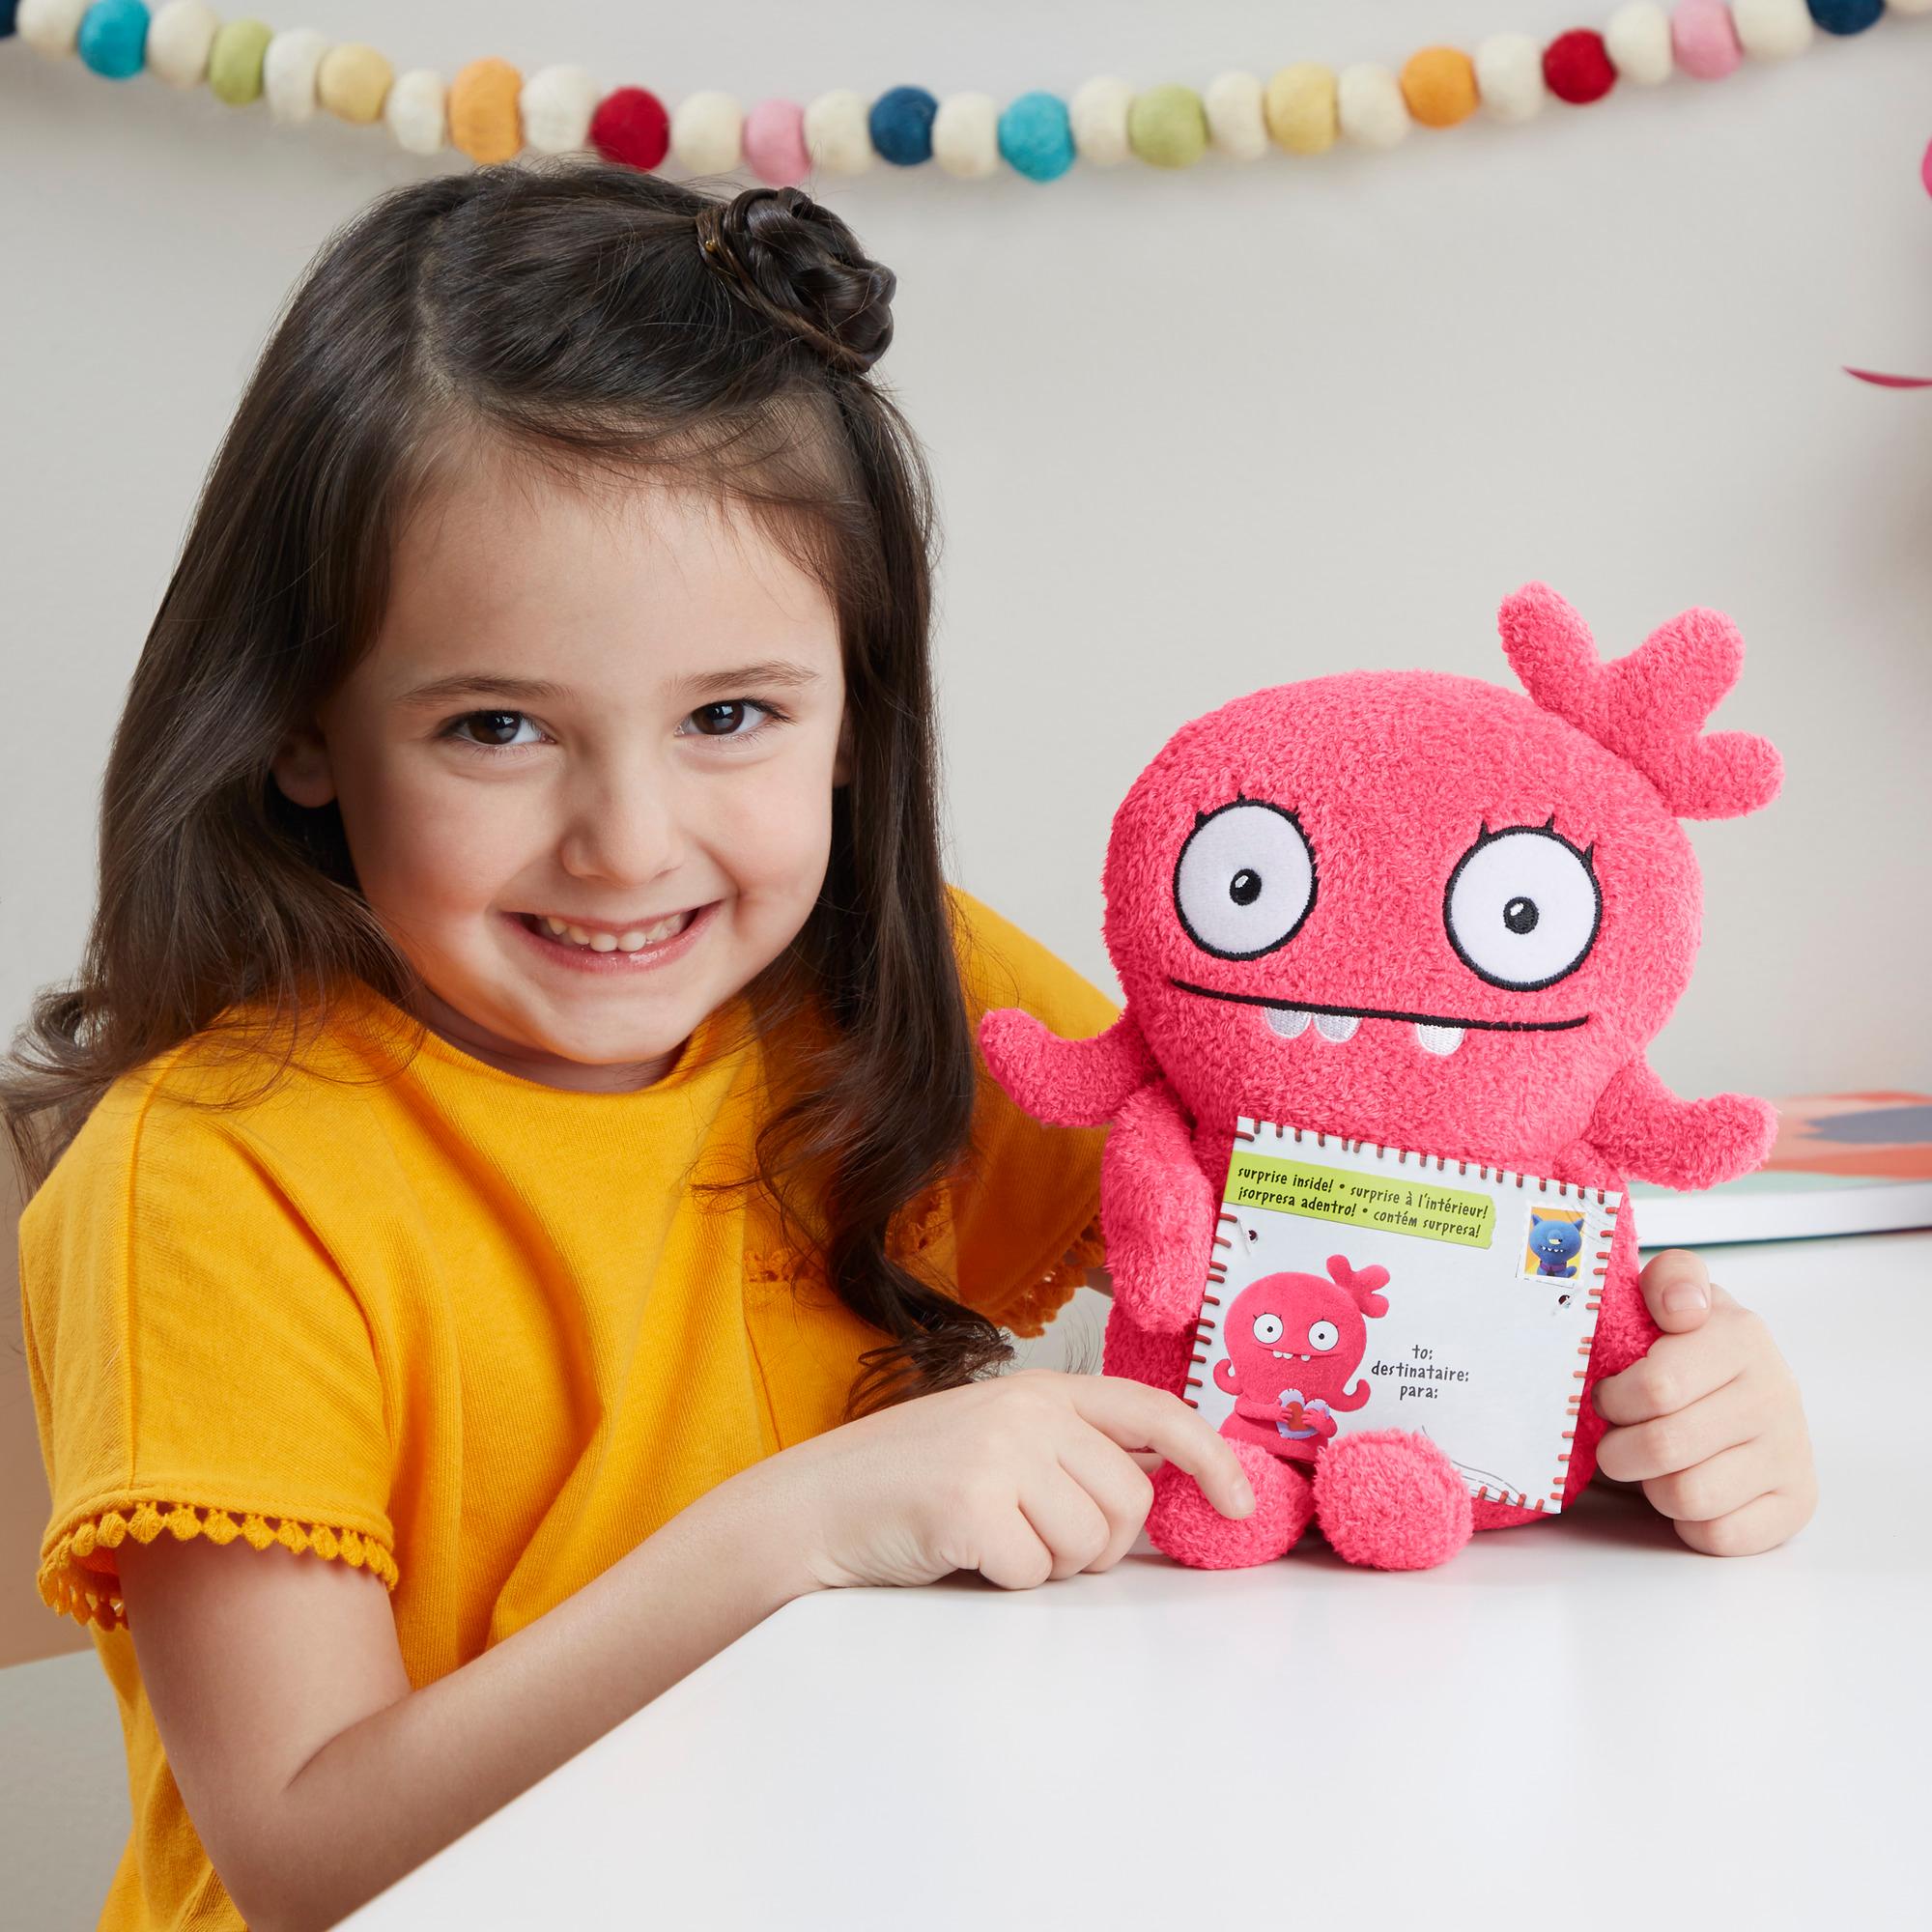 Ugly Dolls Moxy Yours Truly Pink Uglydoll 8" Plush Stuffed Animal Toy 